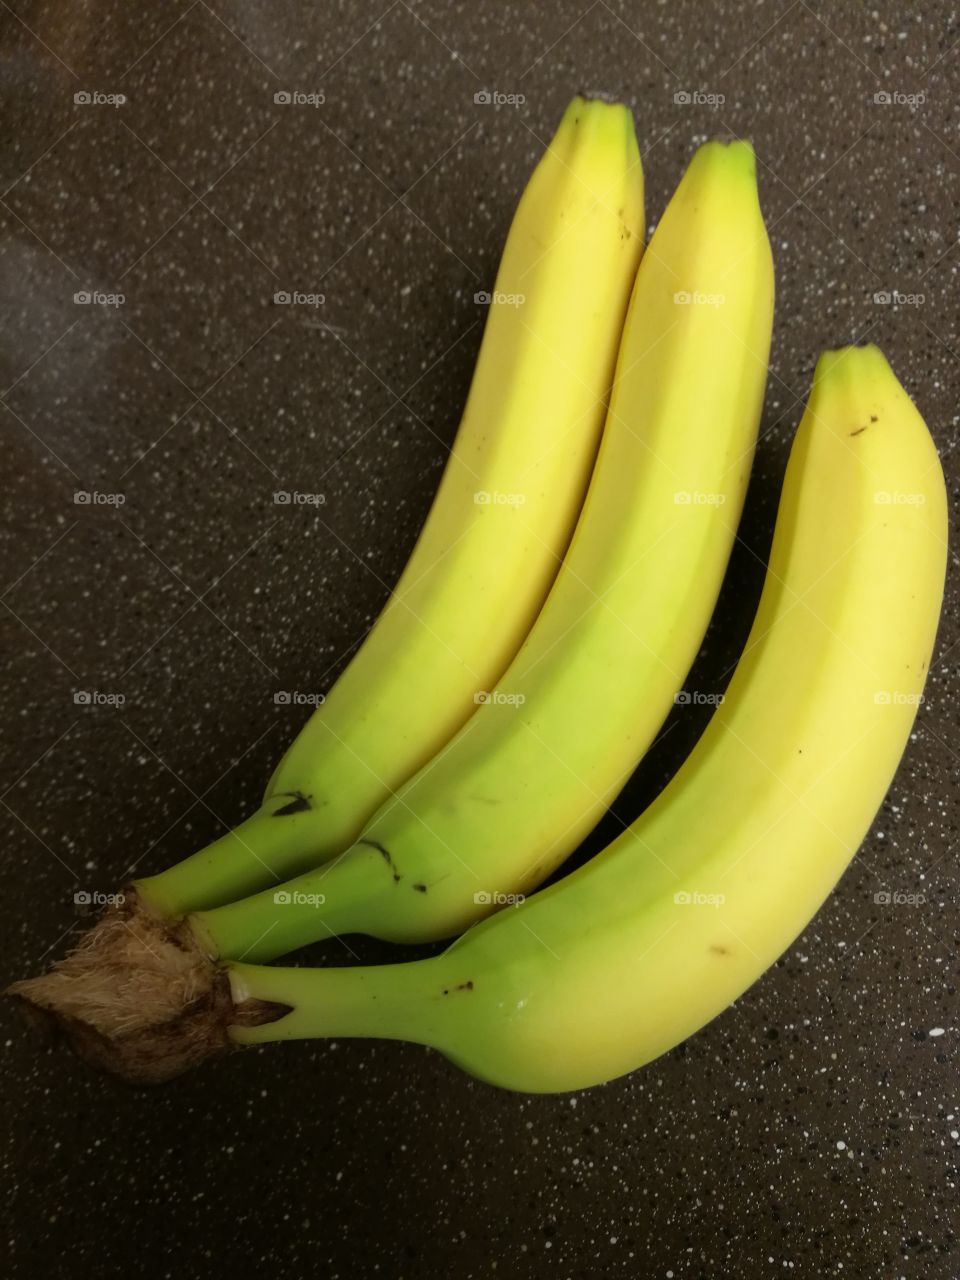 Ripe bananas on brown counter